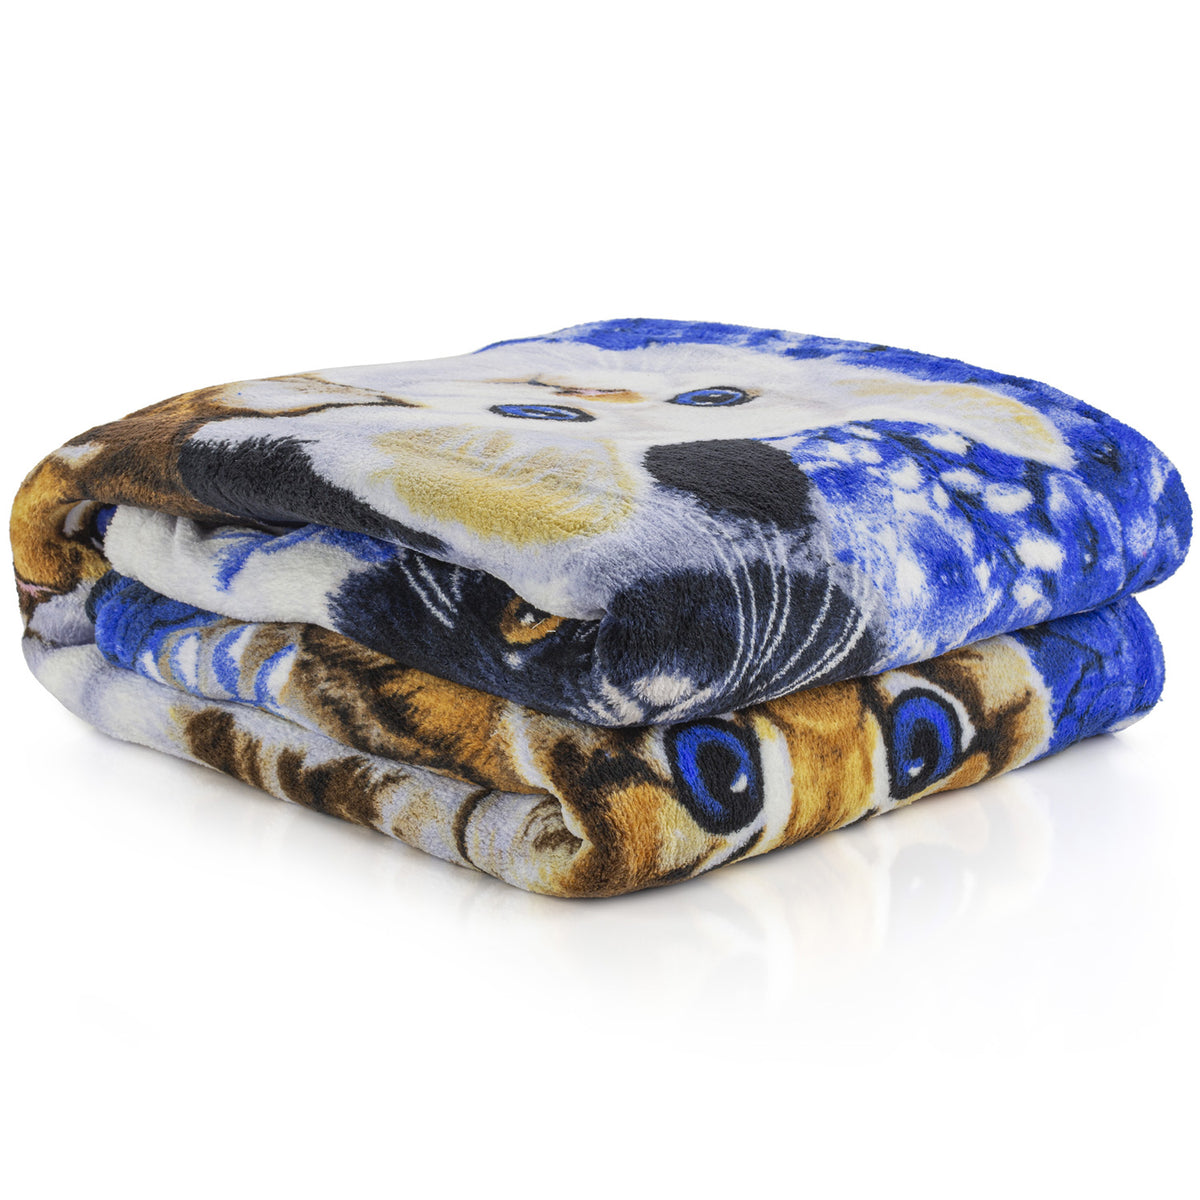 Dawhud Direct Garden Puppies Super Soft Plush Fleece Throw Blanket by Jenny Newland 